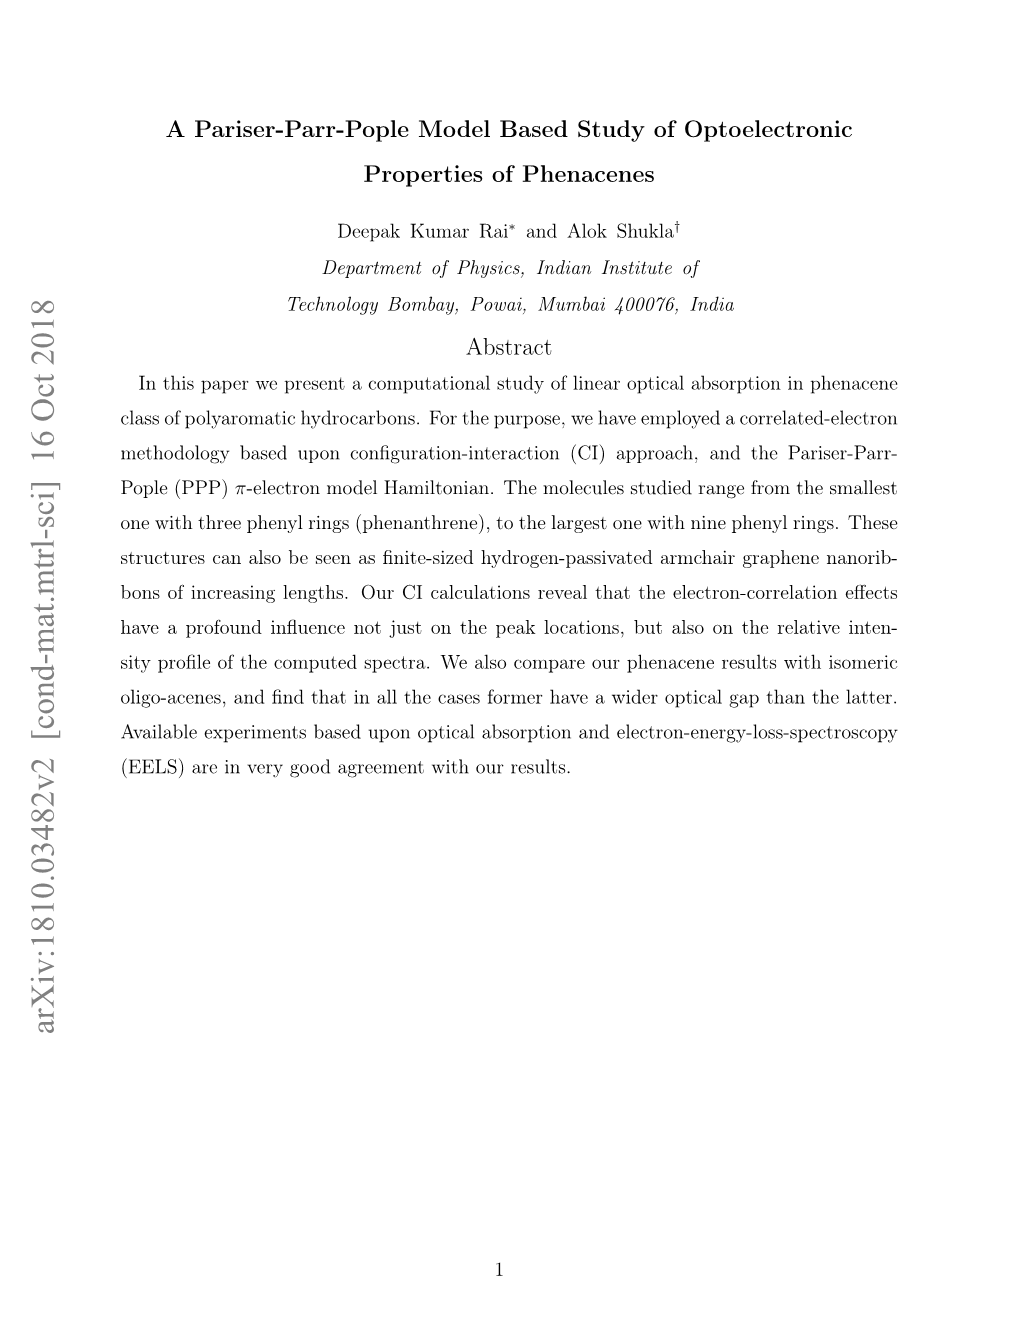 A Pariser-Parr-Pople Model Based Study of Optoelectronic Properties of Phenacenes